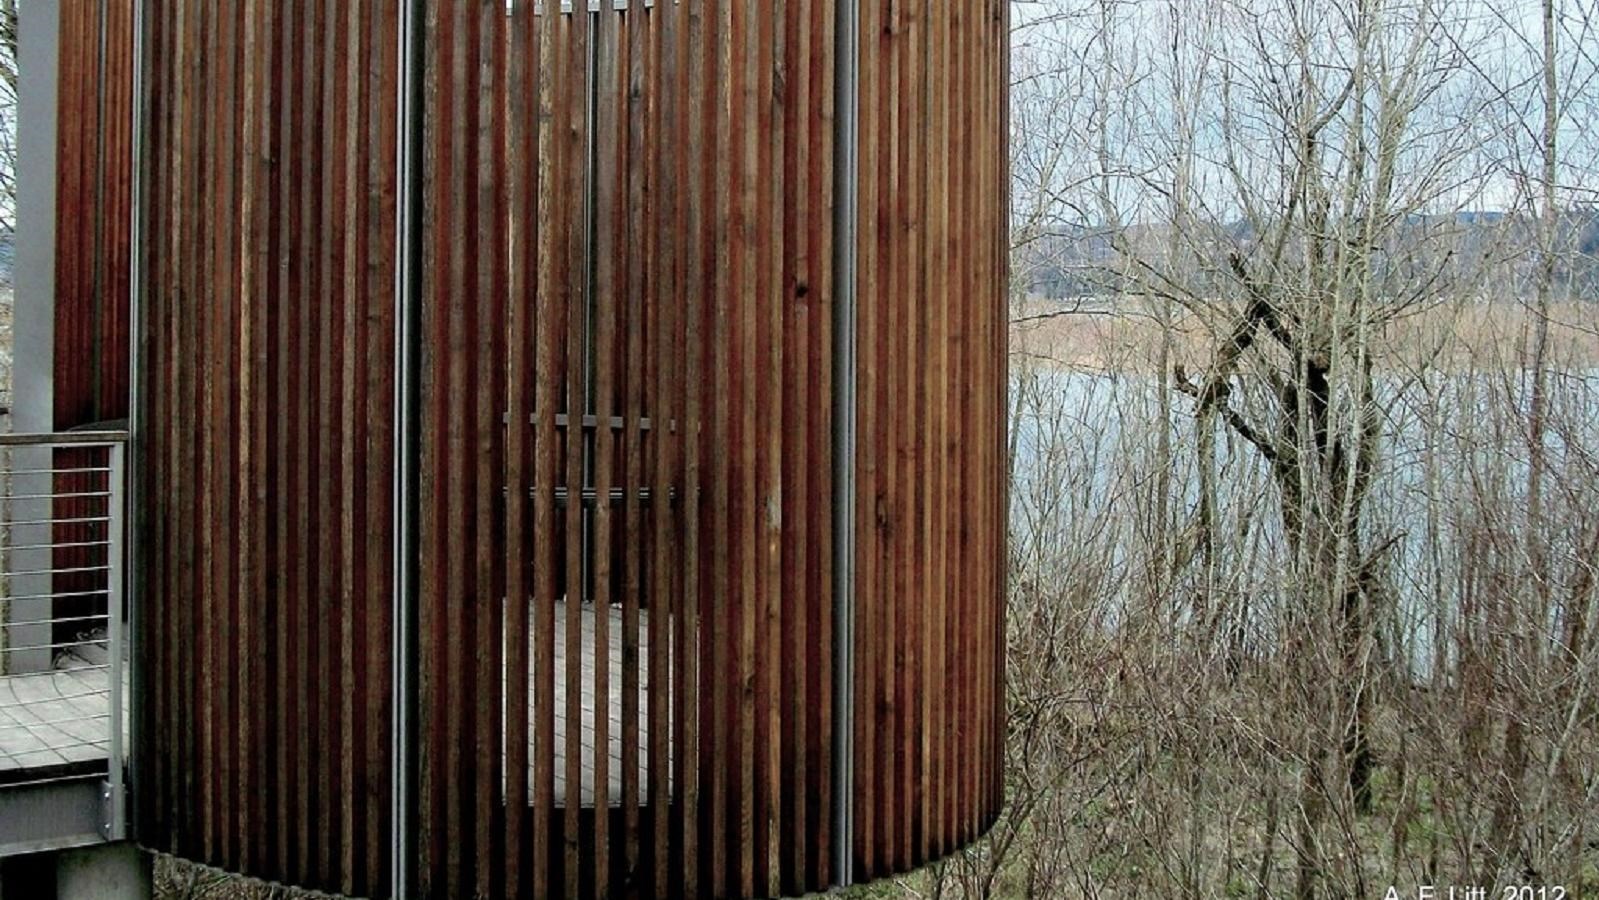 An oval bird blind comprised of vertical wooden slats surrounding an observation platform